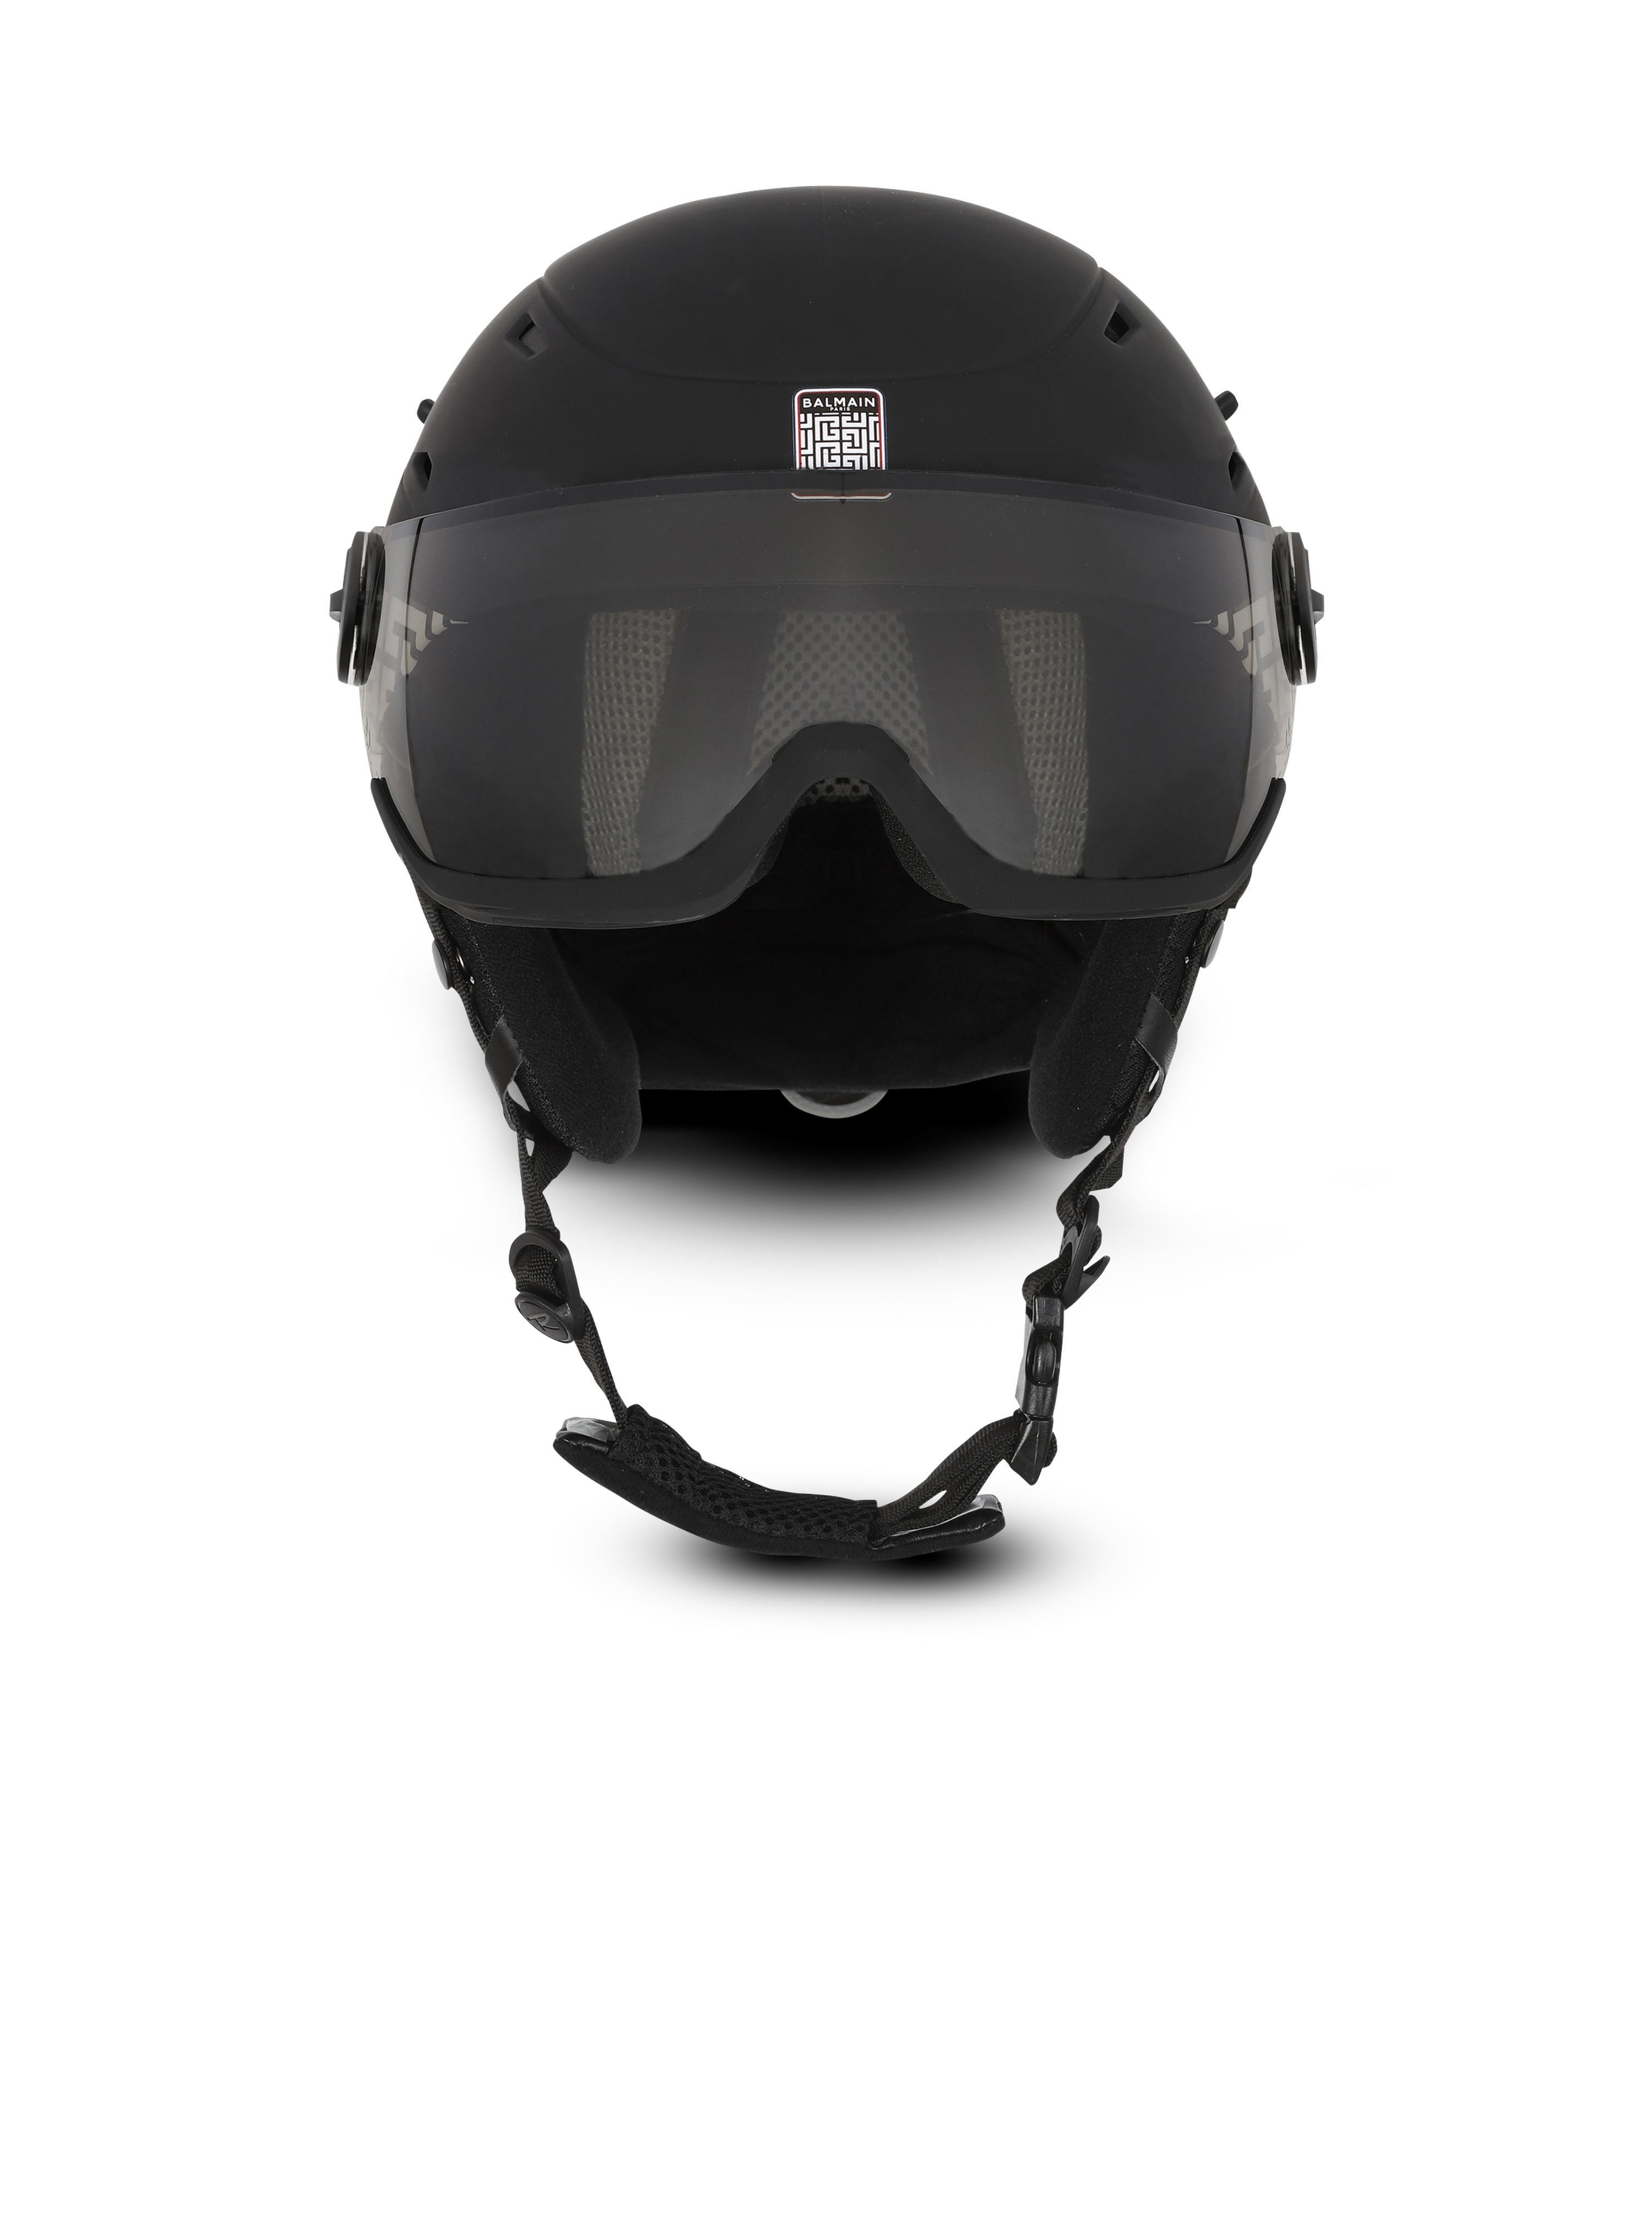 Balmain x Rossignol联名 - Rossignol象牙色和黑色Balmain字母标识图案滑雪头盔, black